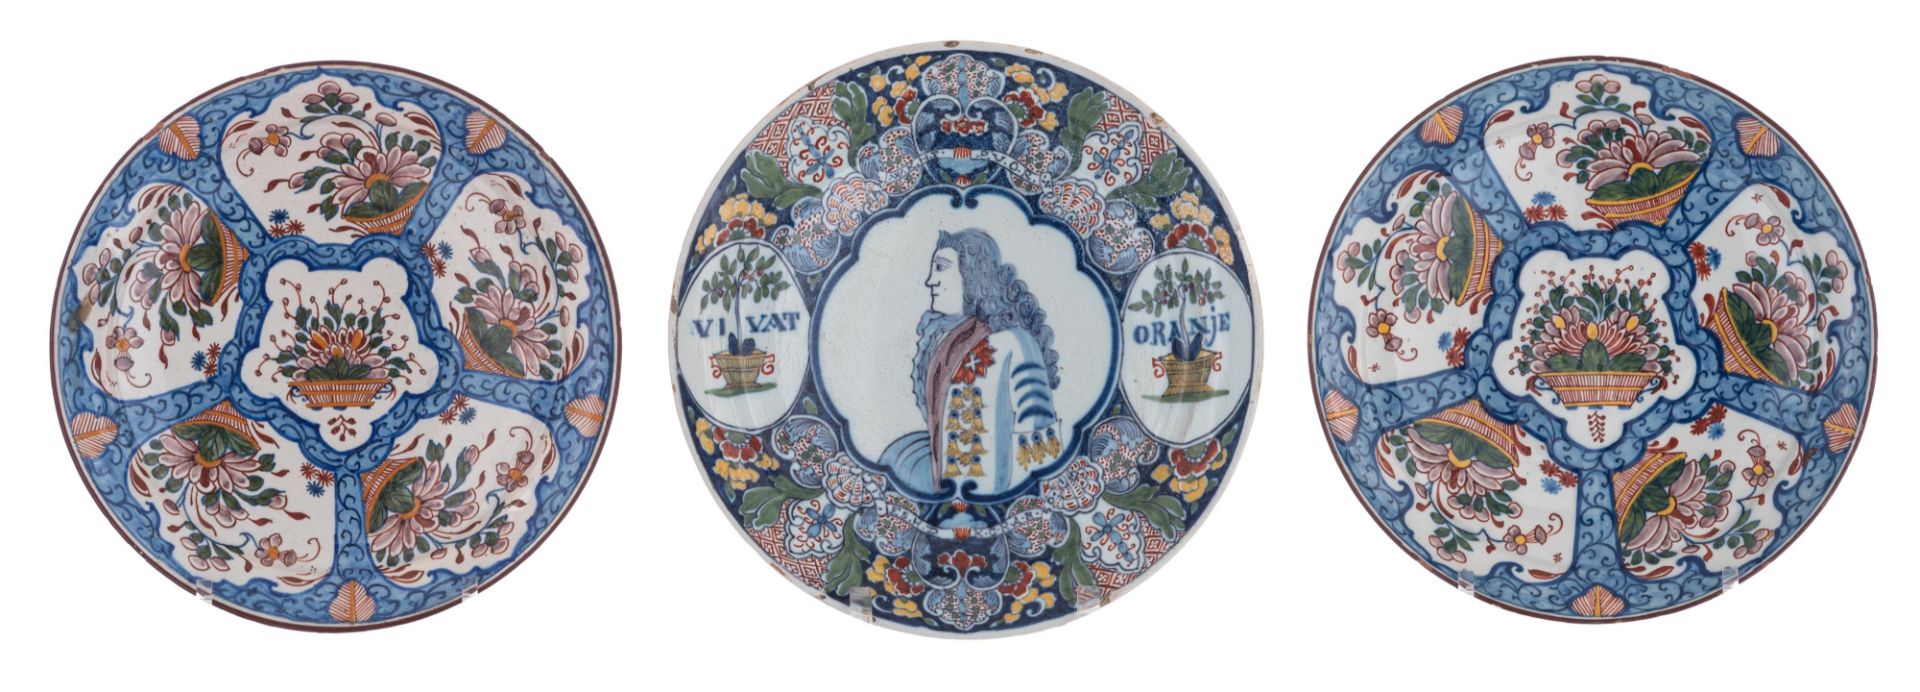 A fine polychrome decorated Dutch Delftware 'Oranje' plate, with inscription 'W.K.H.F.P.V.O.R.' (Wil